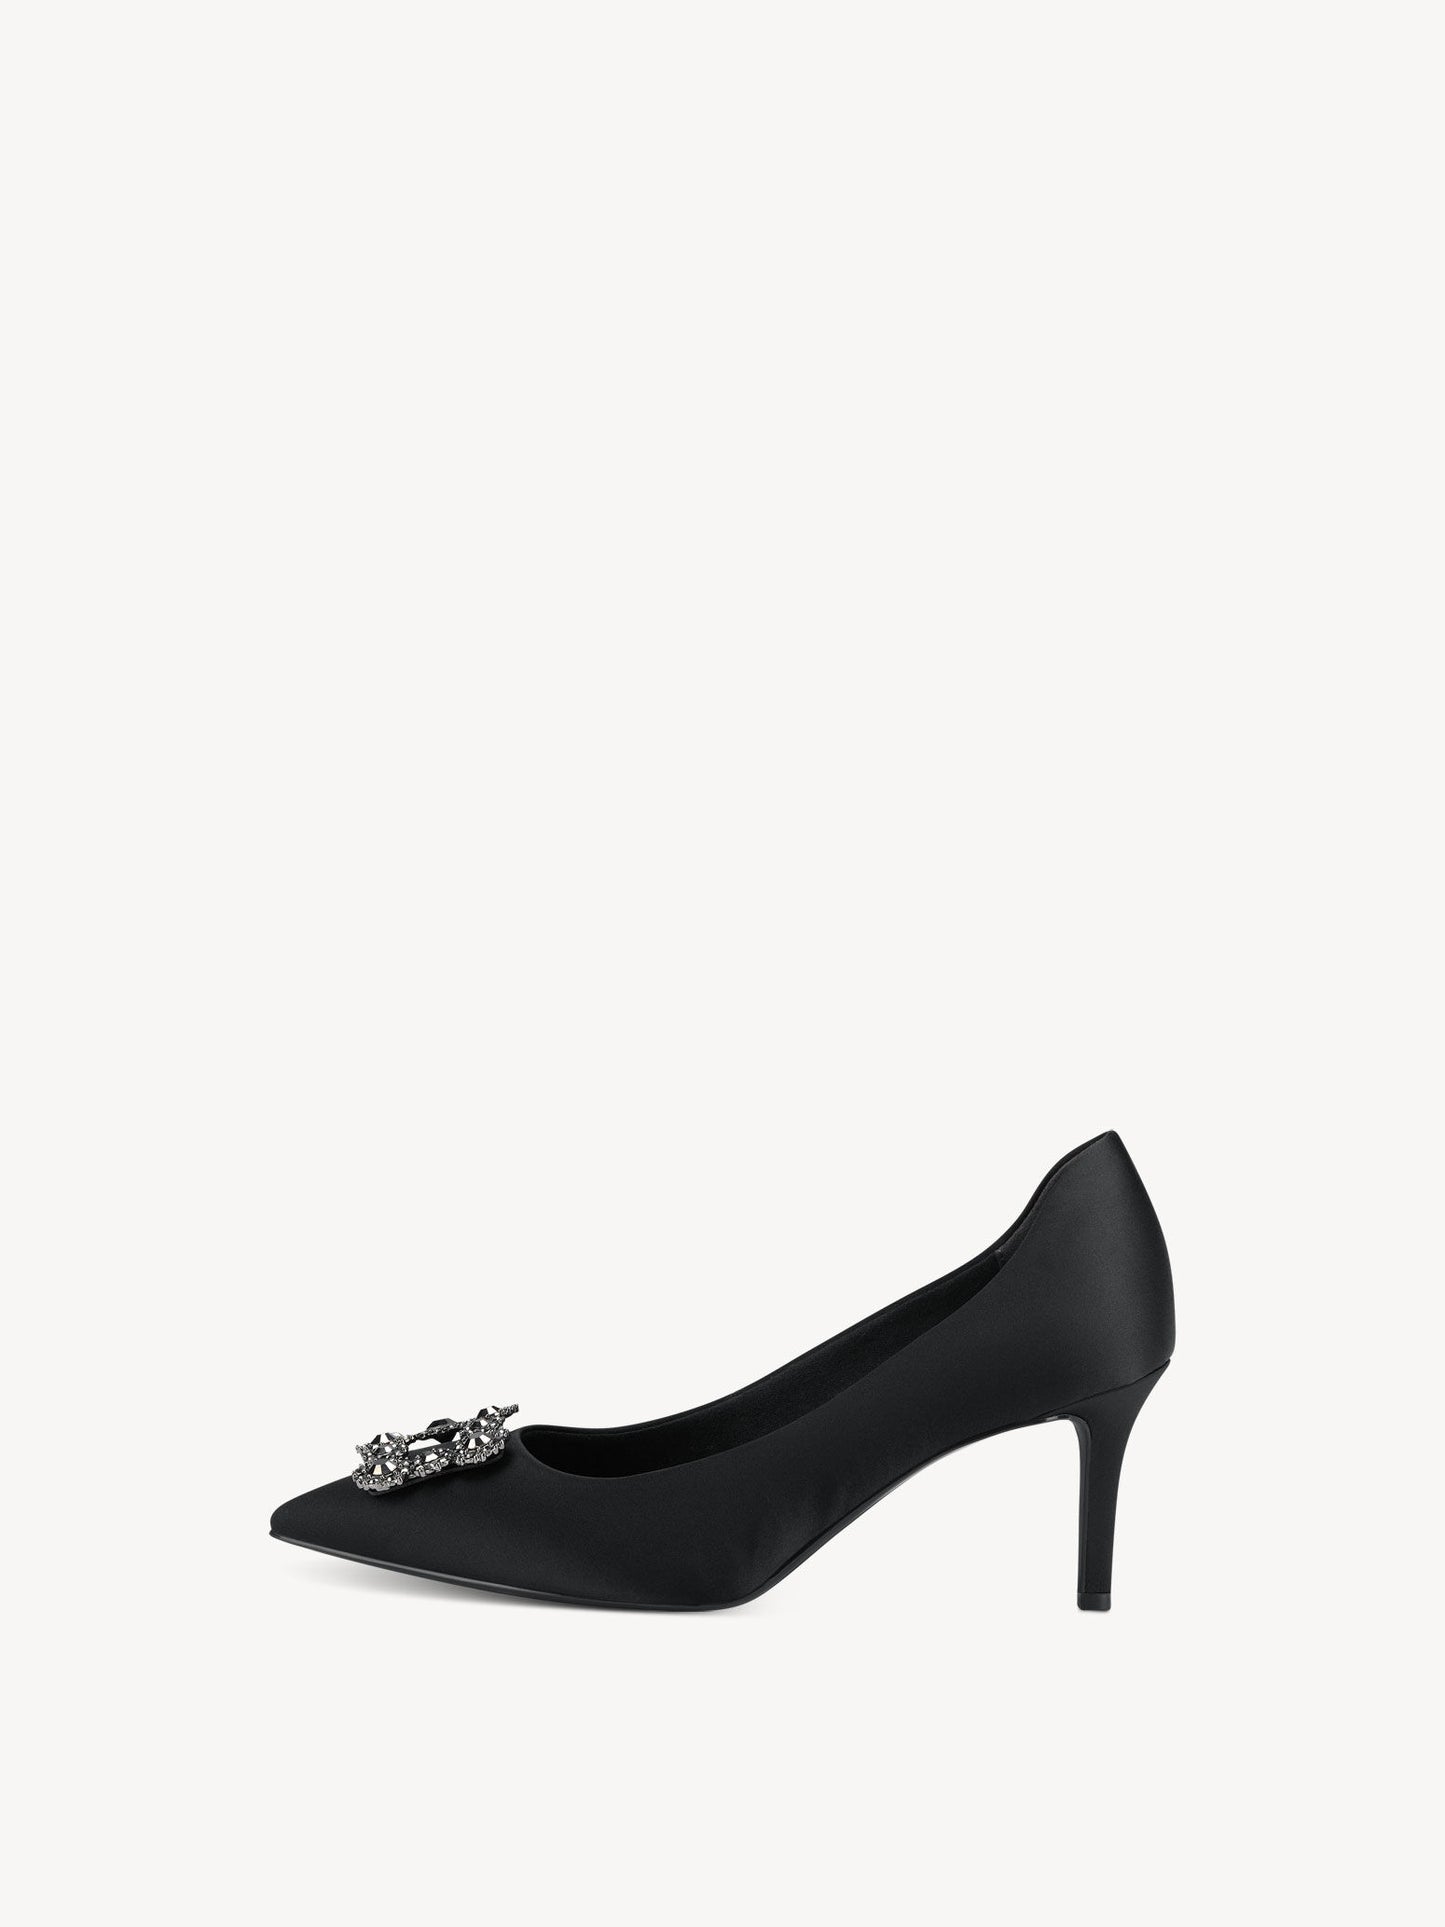 Tamaris Women's 1-22430-20 070 Heel Pumps Shoes Black Satin